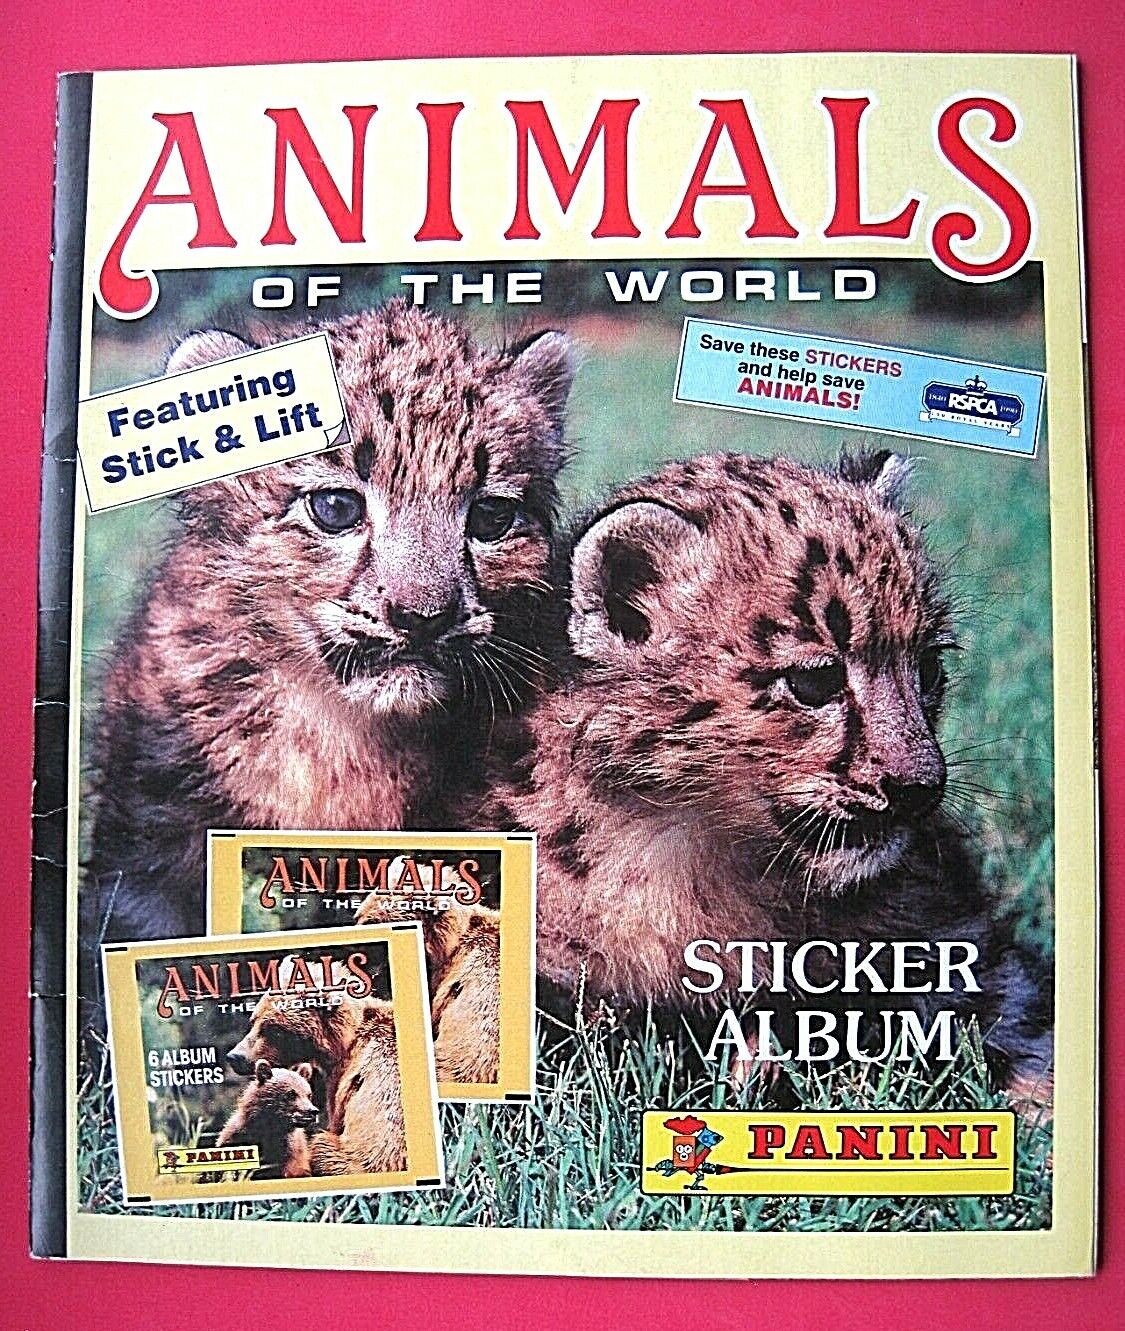 ANIMALS OF THE WORLD - PANINI - EMPTY AND UNUSED ALBUM 1990 | eBay